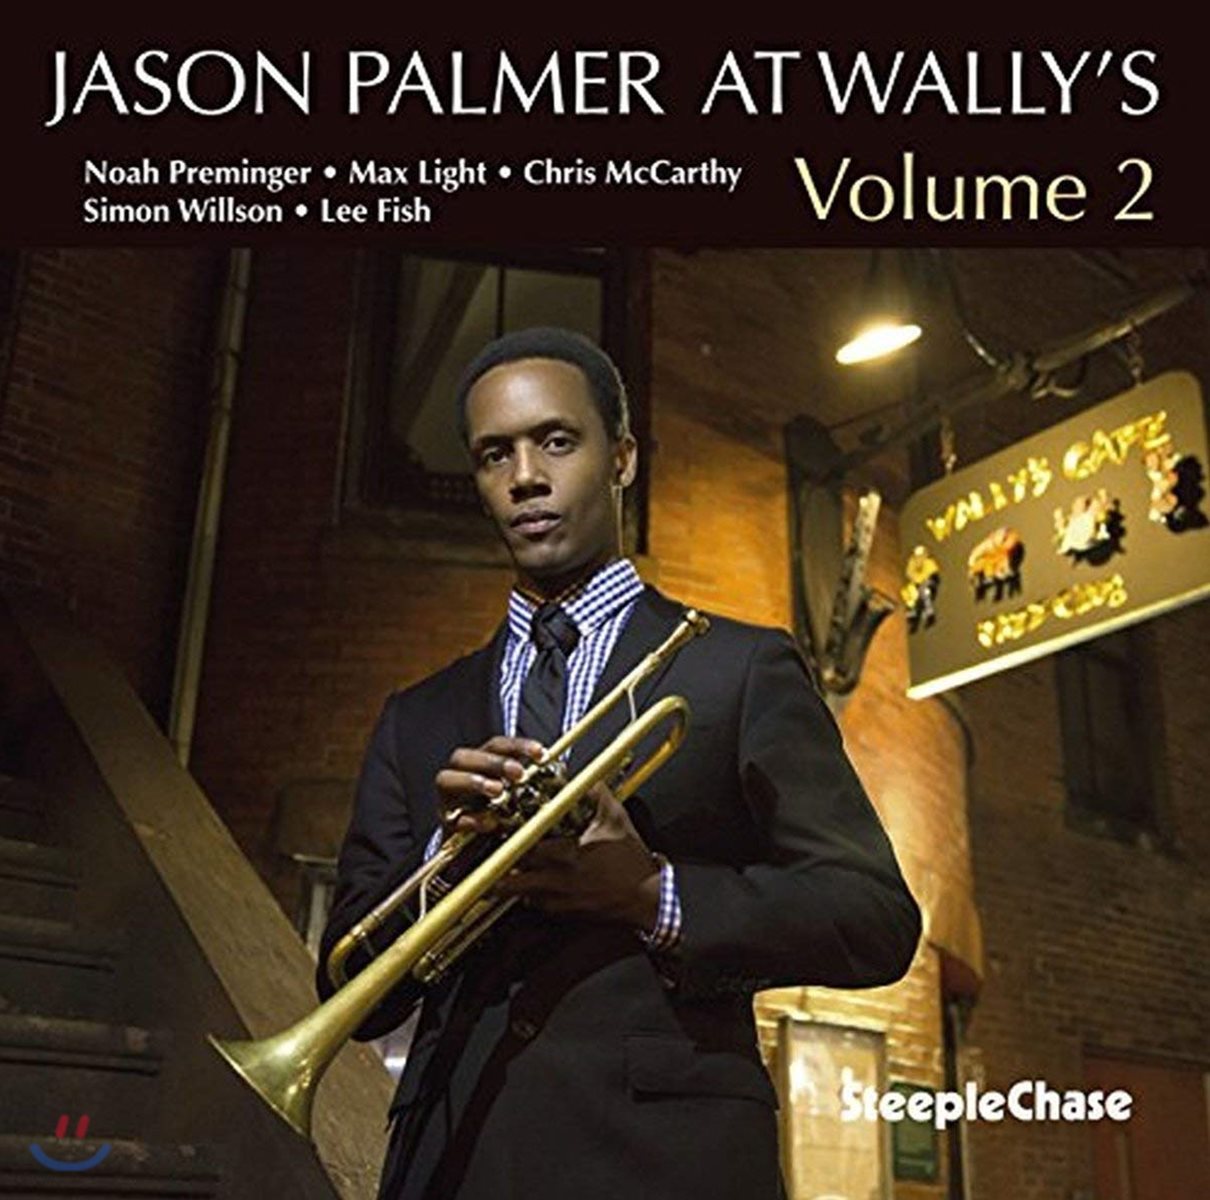 Jason Palmer (제이슨 팔머) - At Wally’s Volume 2